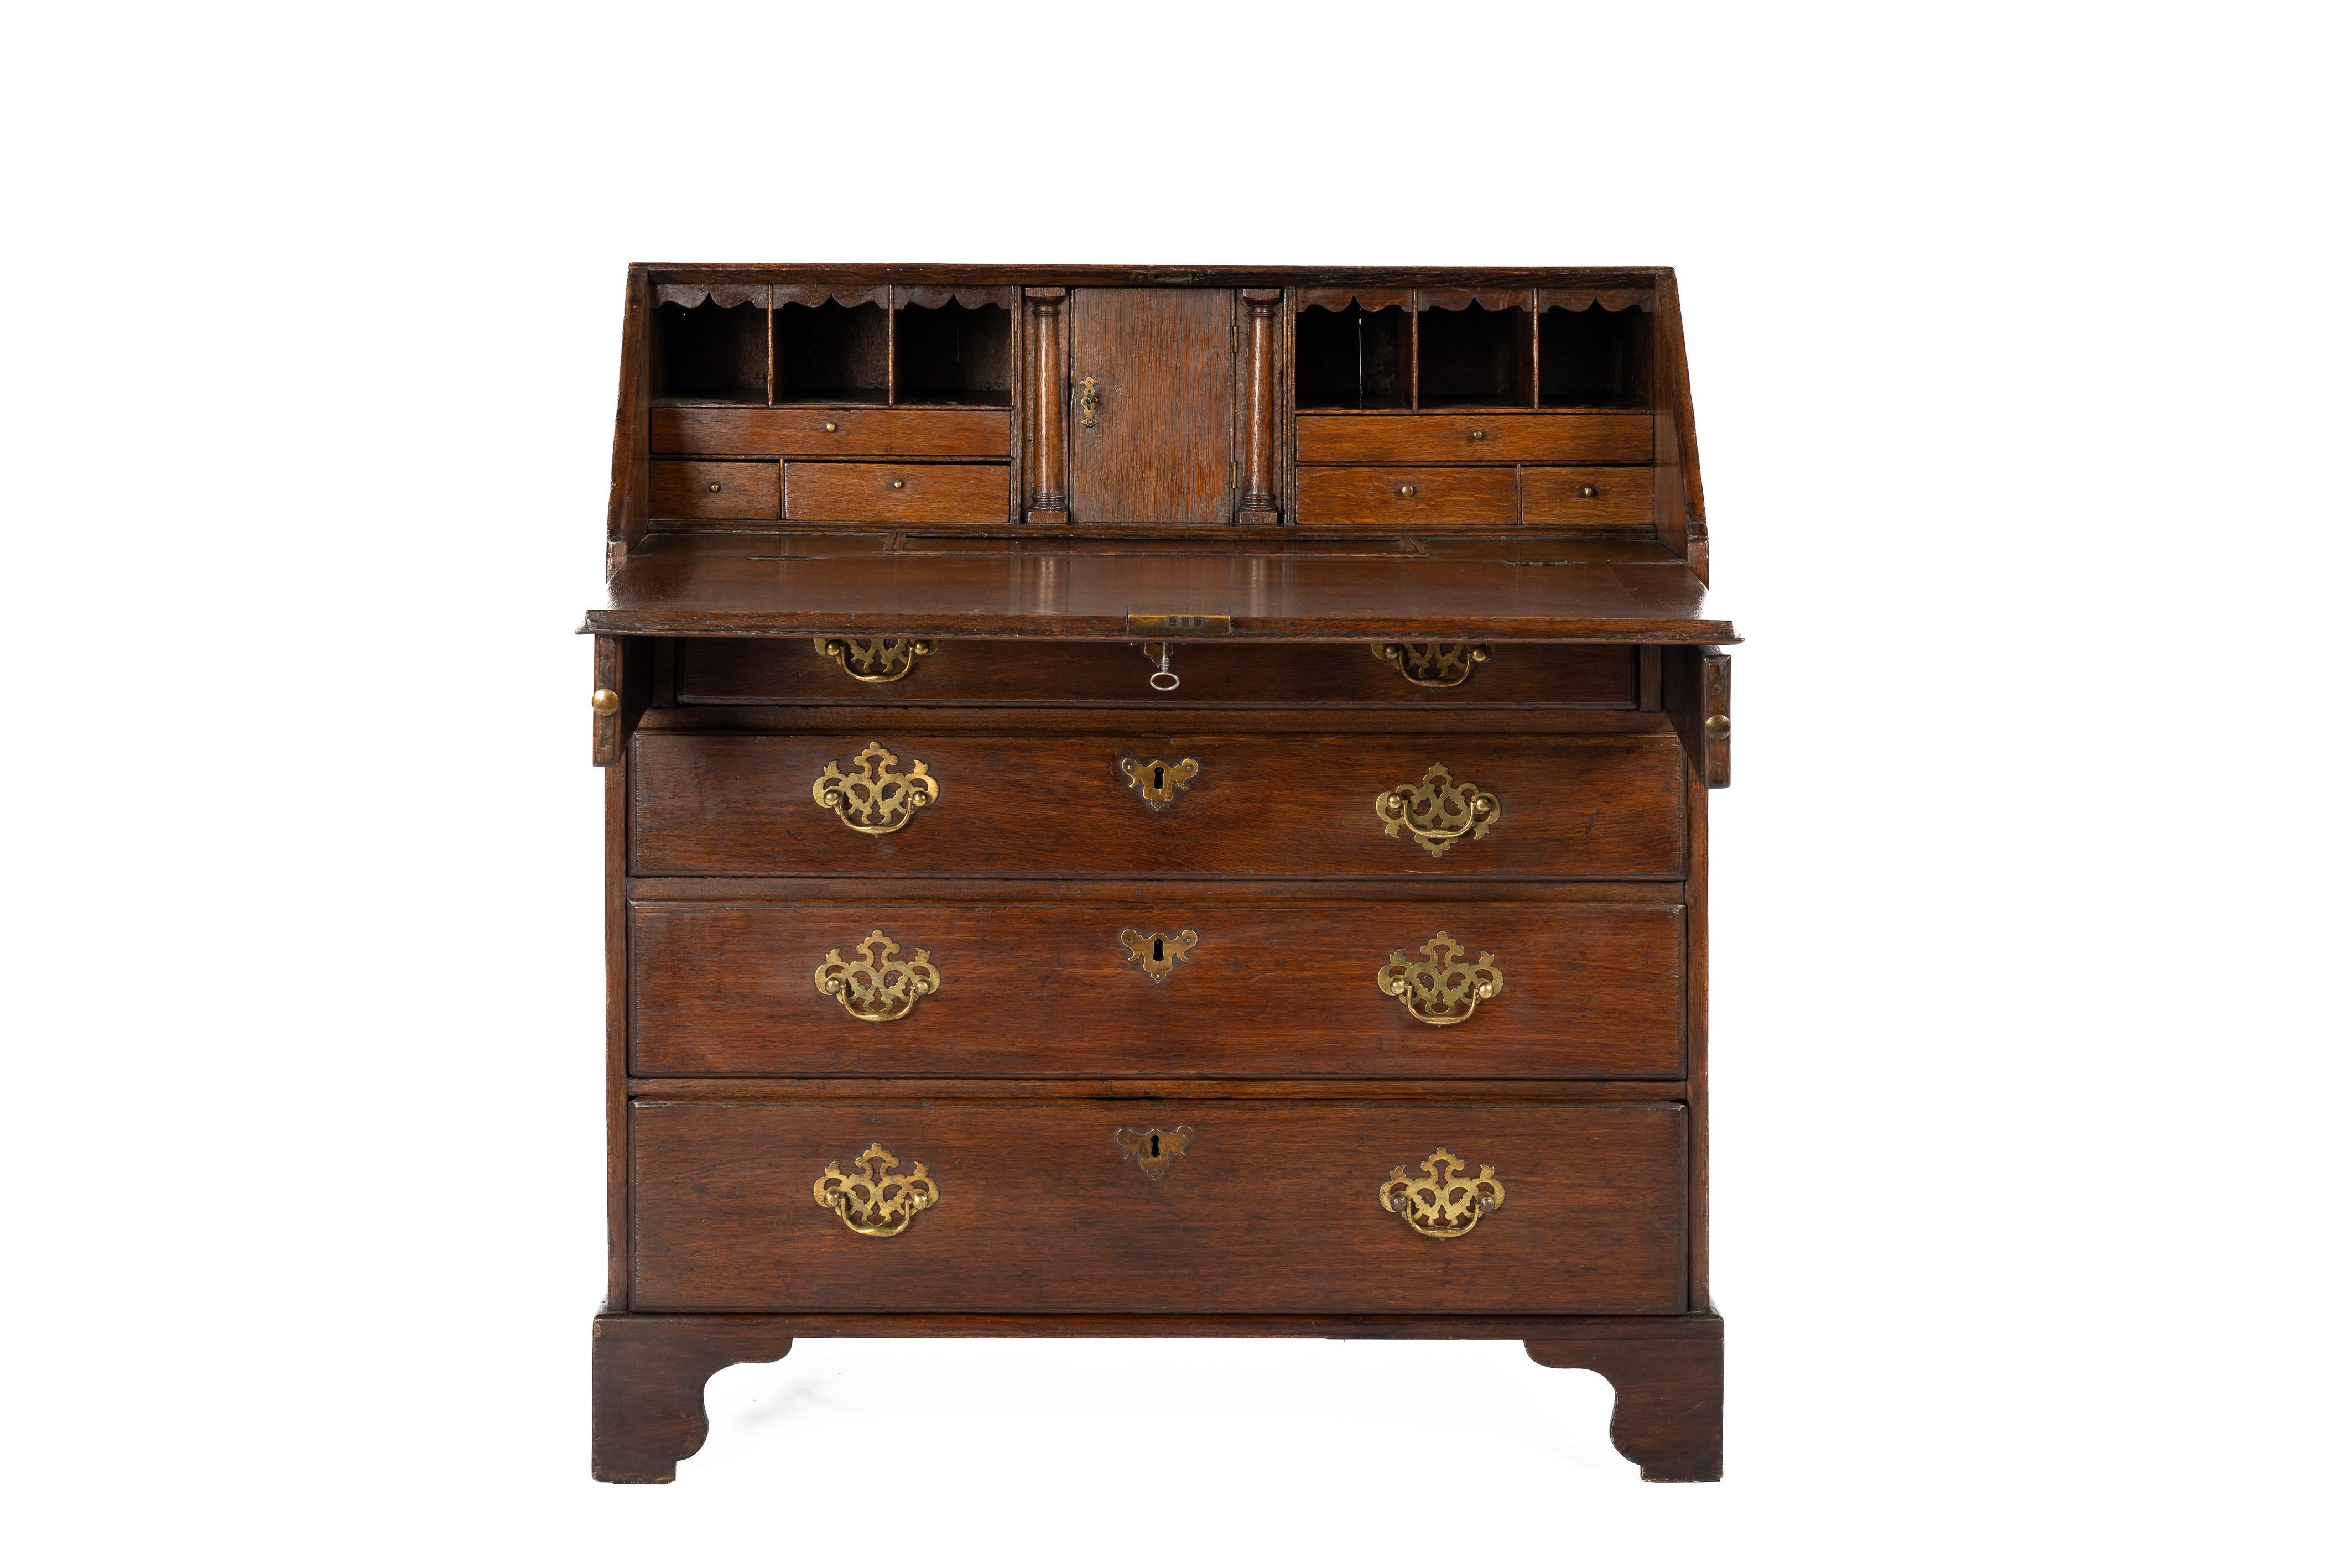 British Antique 18th century warm brown English Oak Queen Anne Slant-Front Desk For Sale